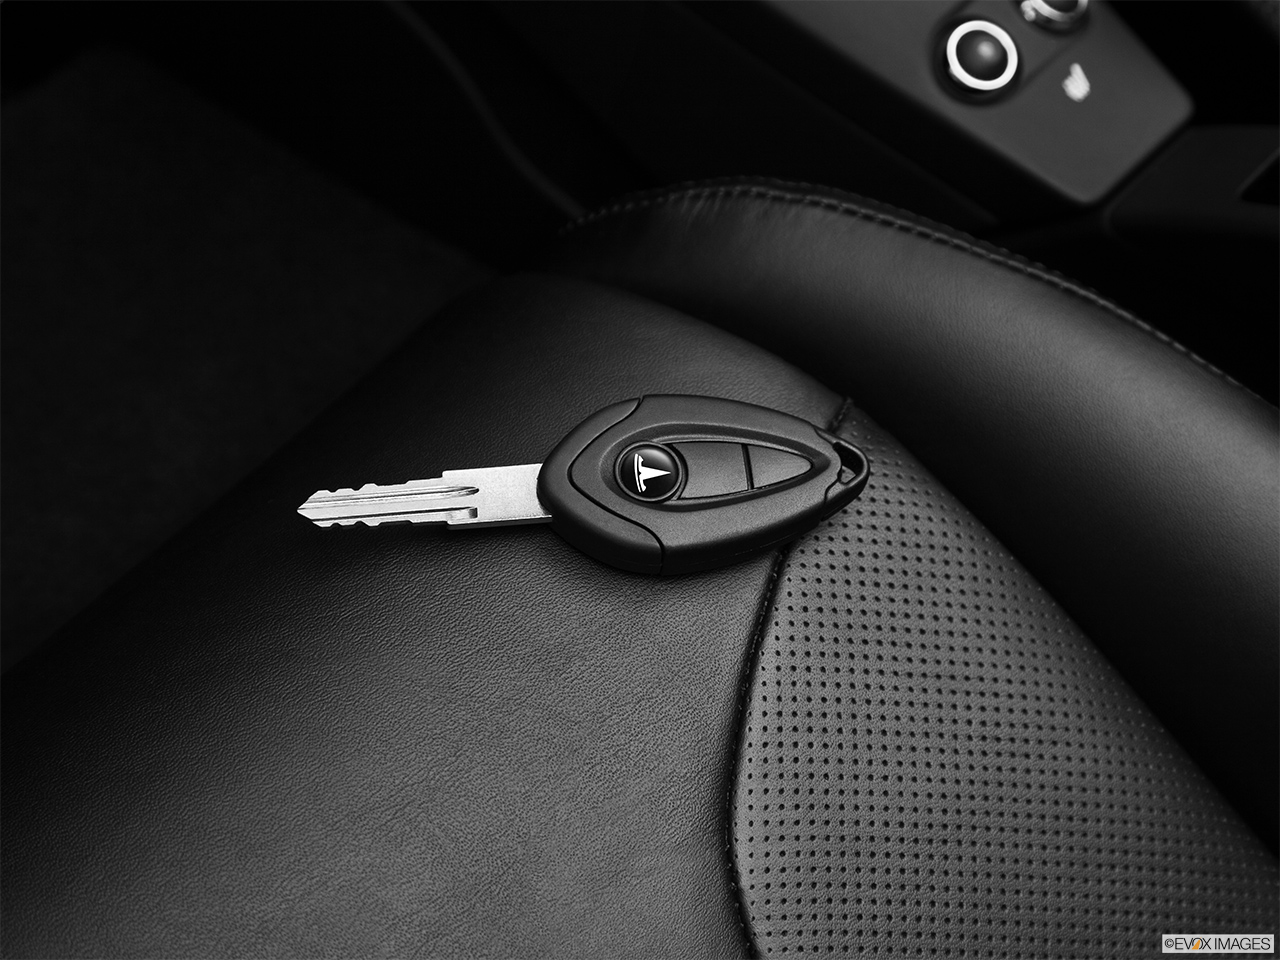 2010 Tesla Roadster sport Key fob on driver's seat. 